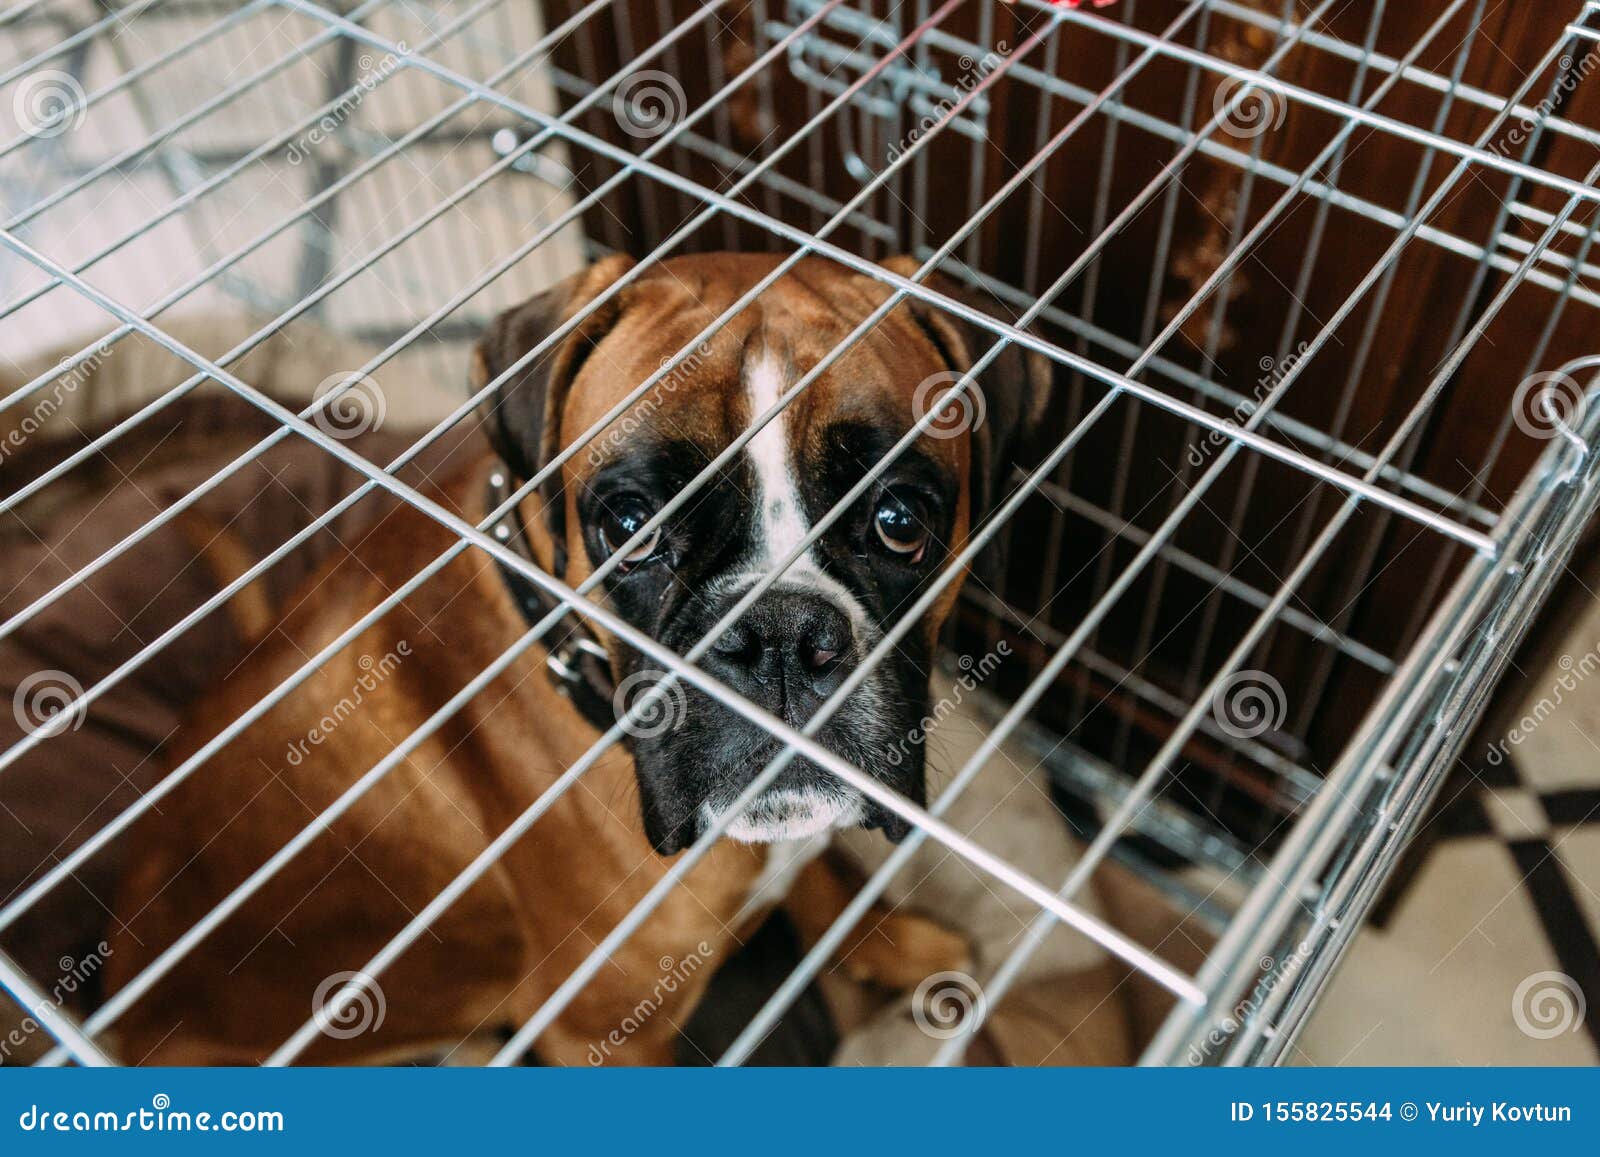 Animals Bulldog Cage Transportation Travel Temporary Stock